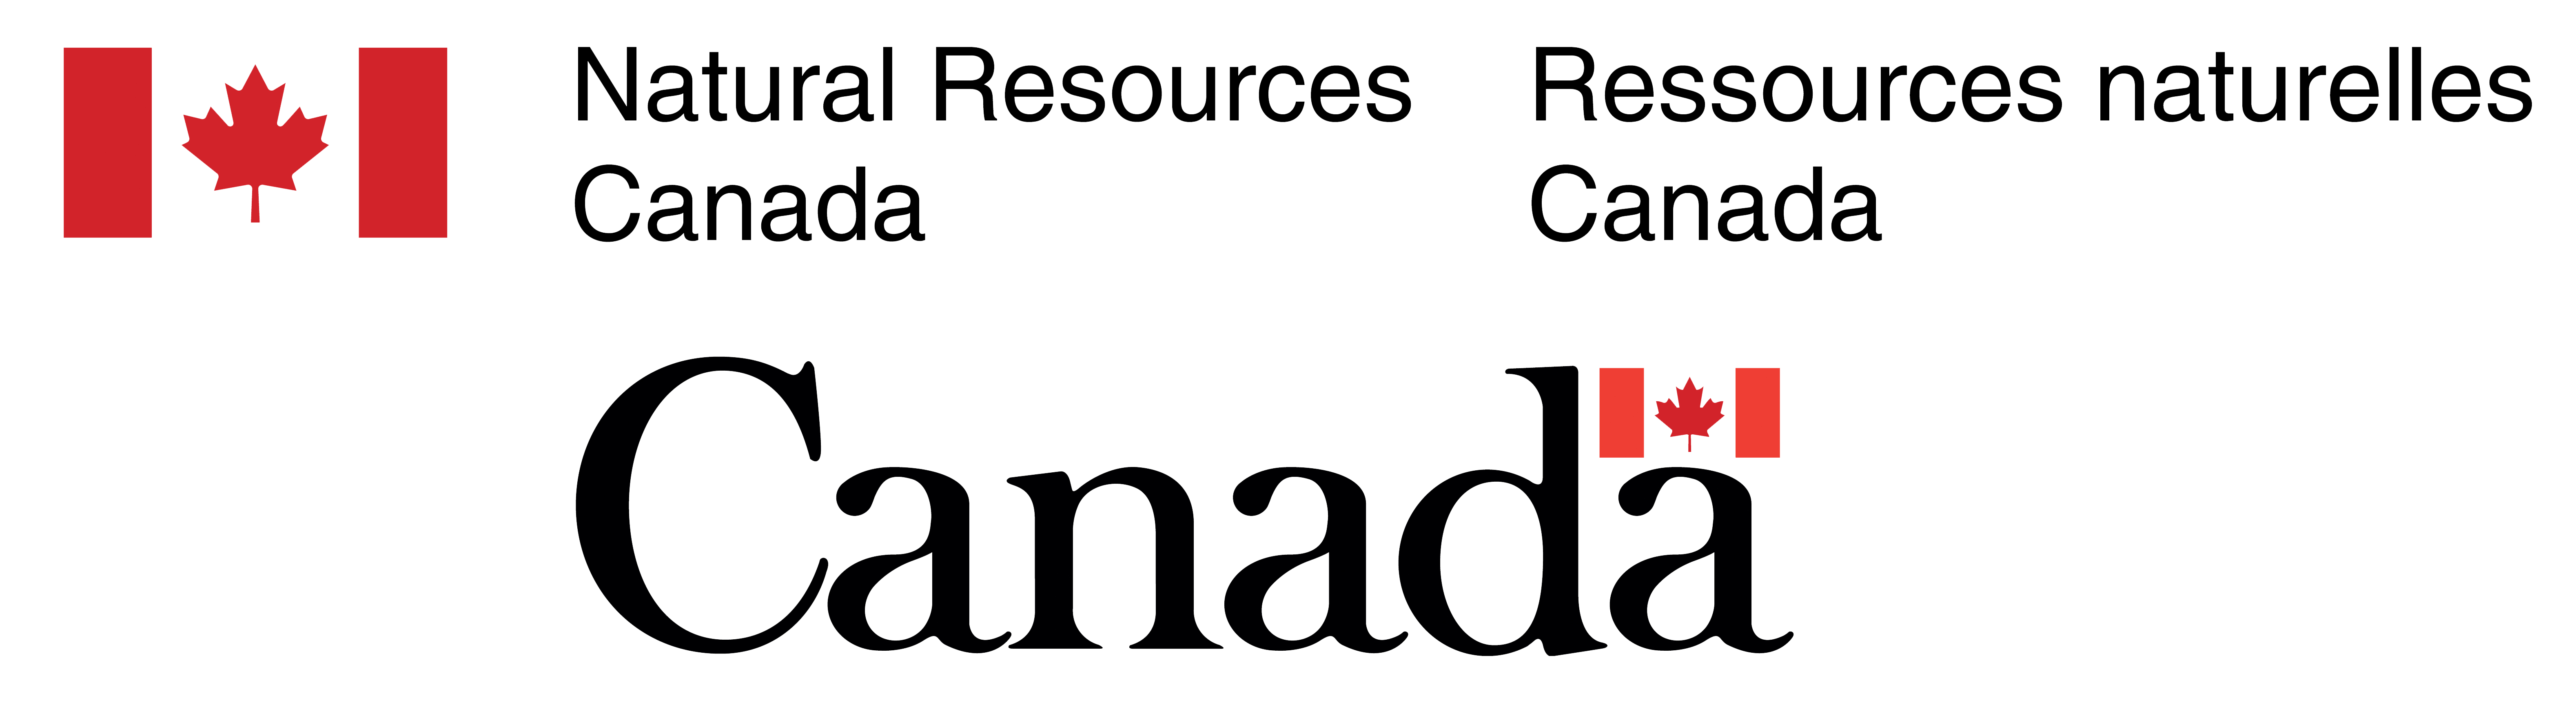 Logo Canadian Natural Resources PNG - 34961